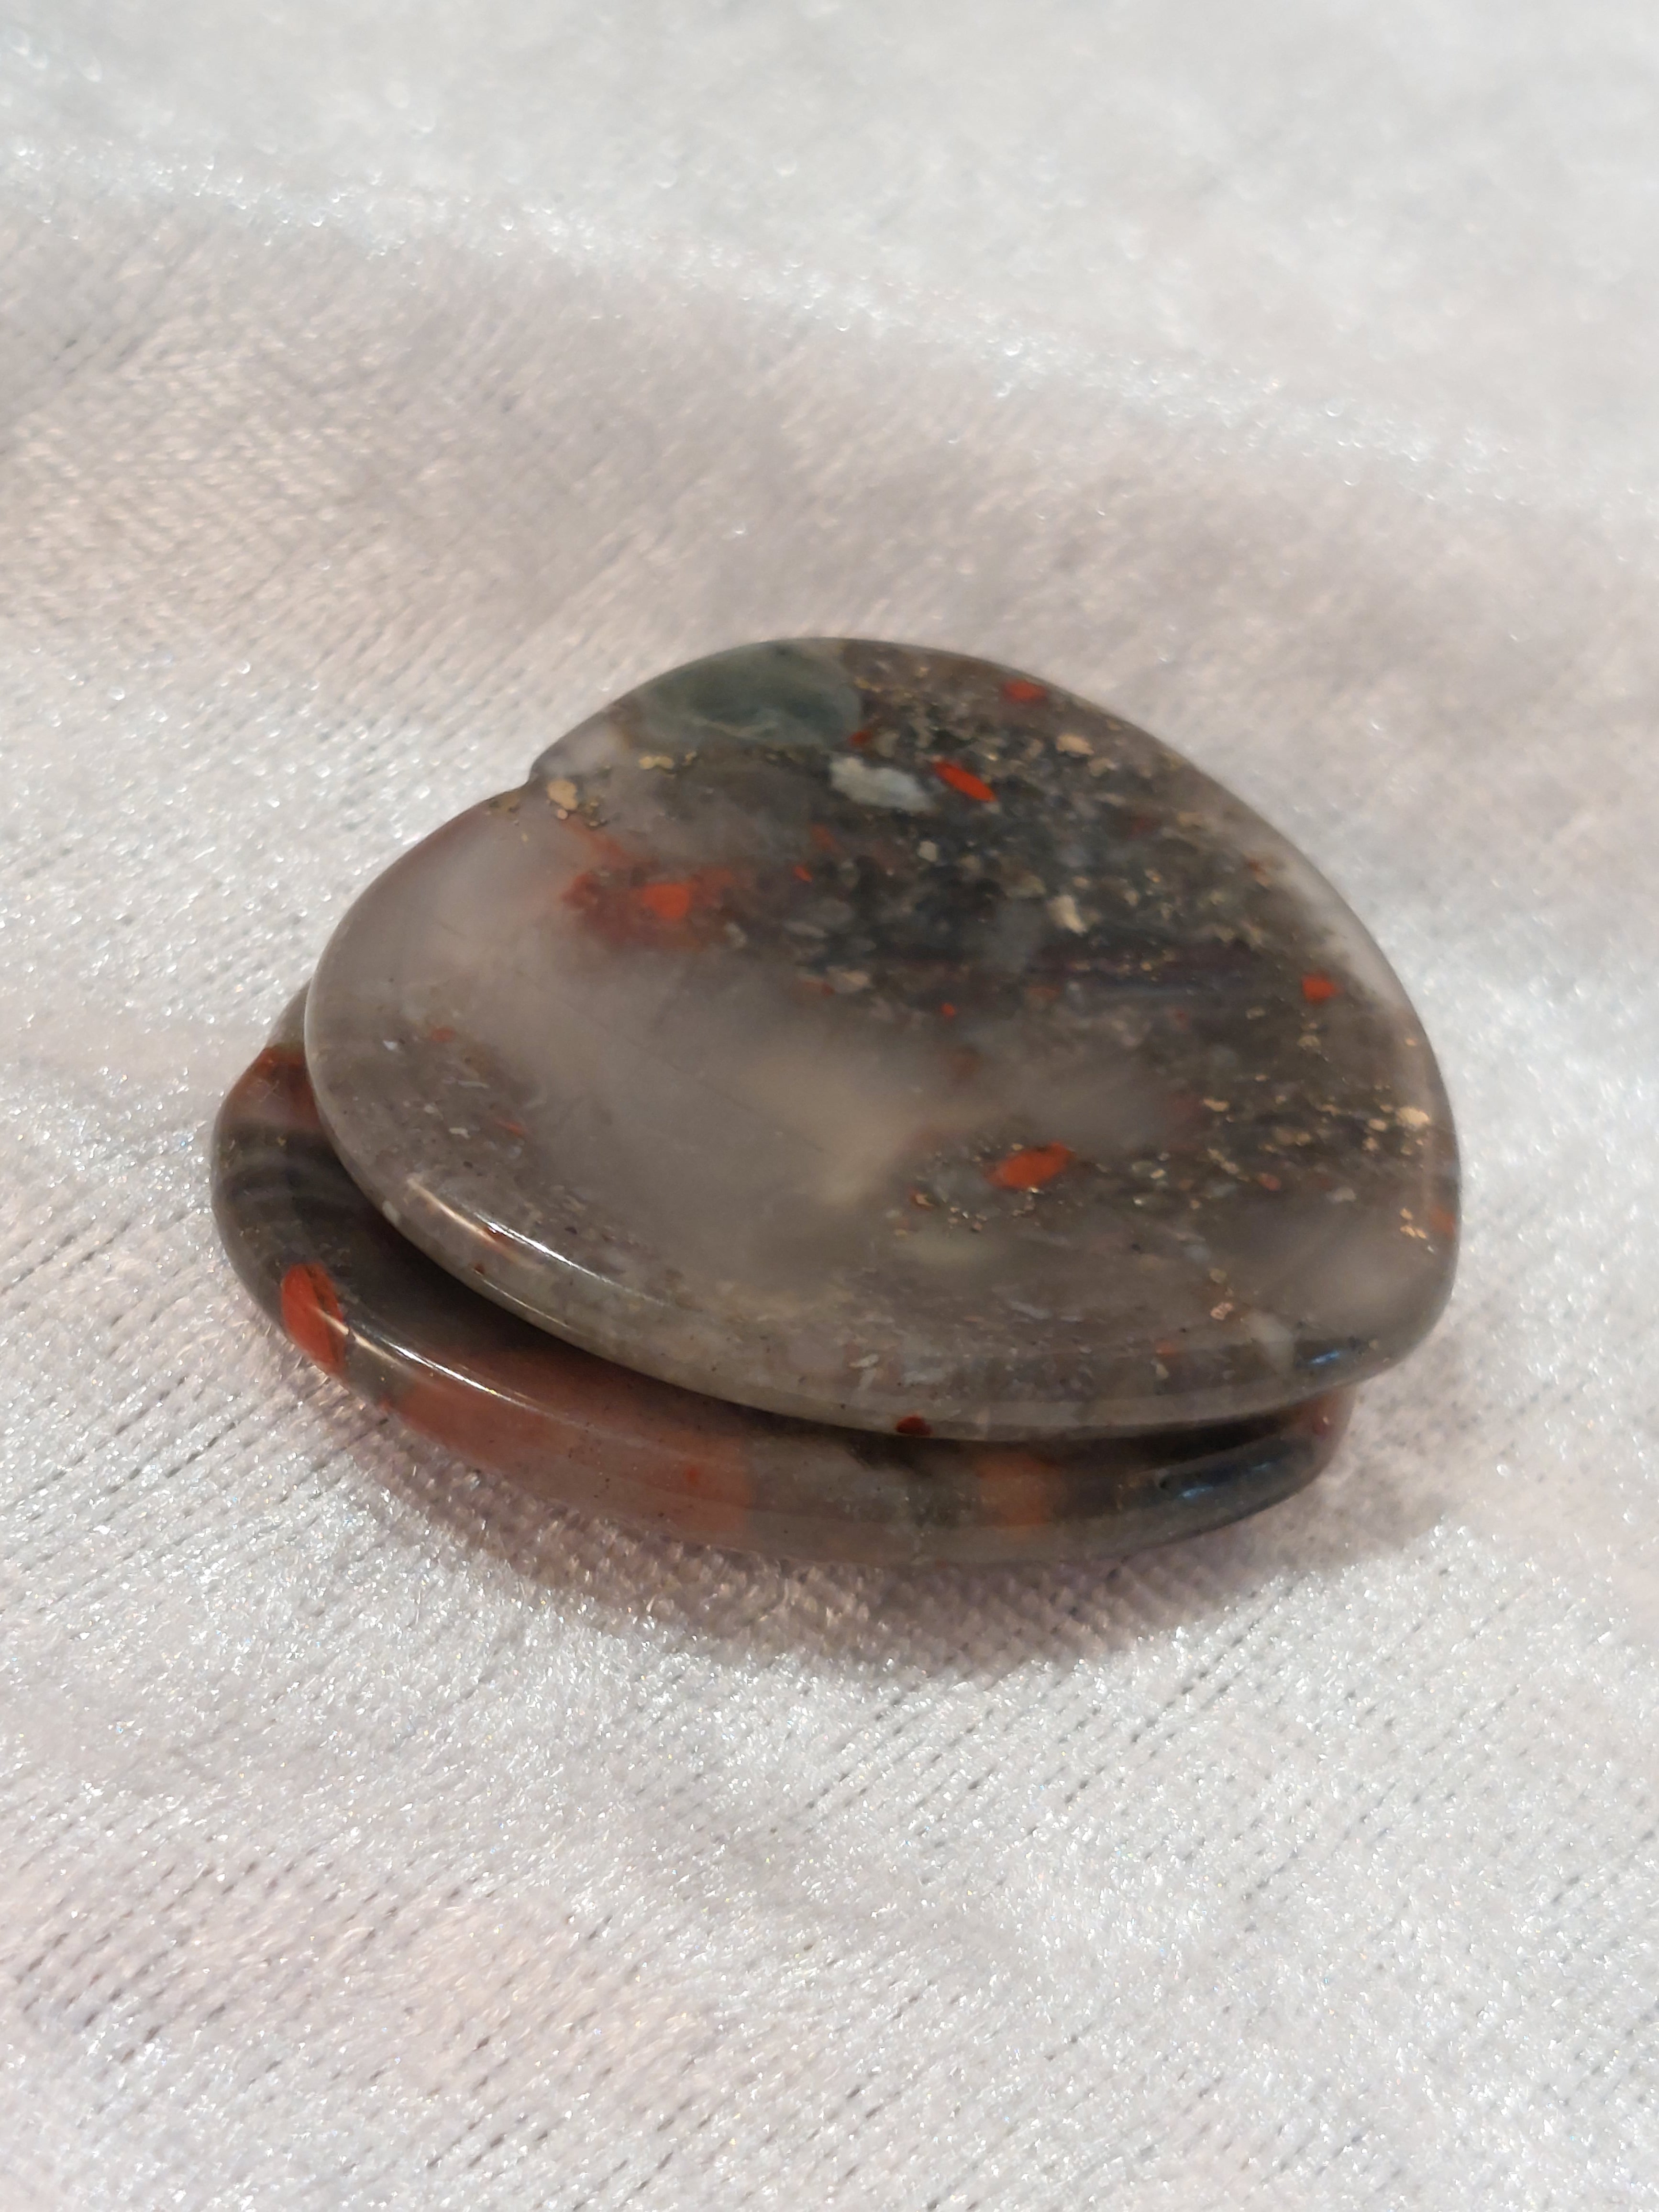 Bloodstone (Heliotrope) Heart Shaped Thumb Stone